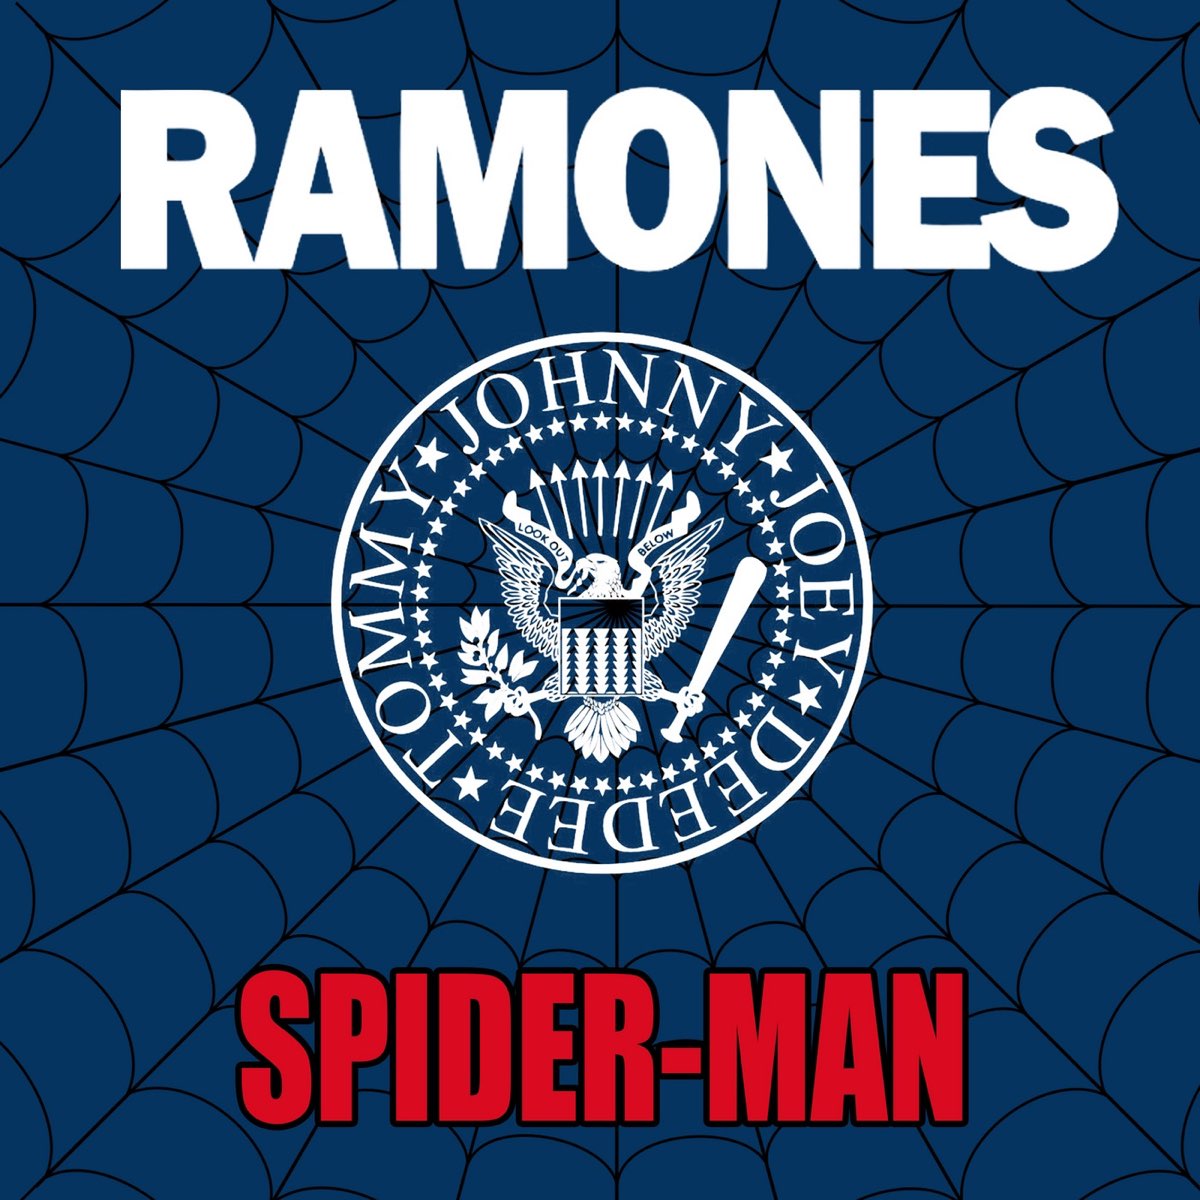 Spider-Man - Single by Ramones on Apple Music